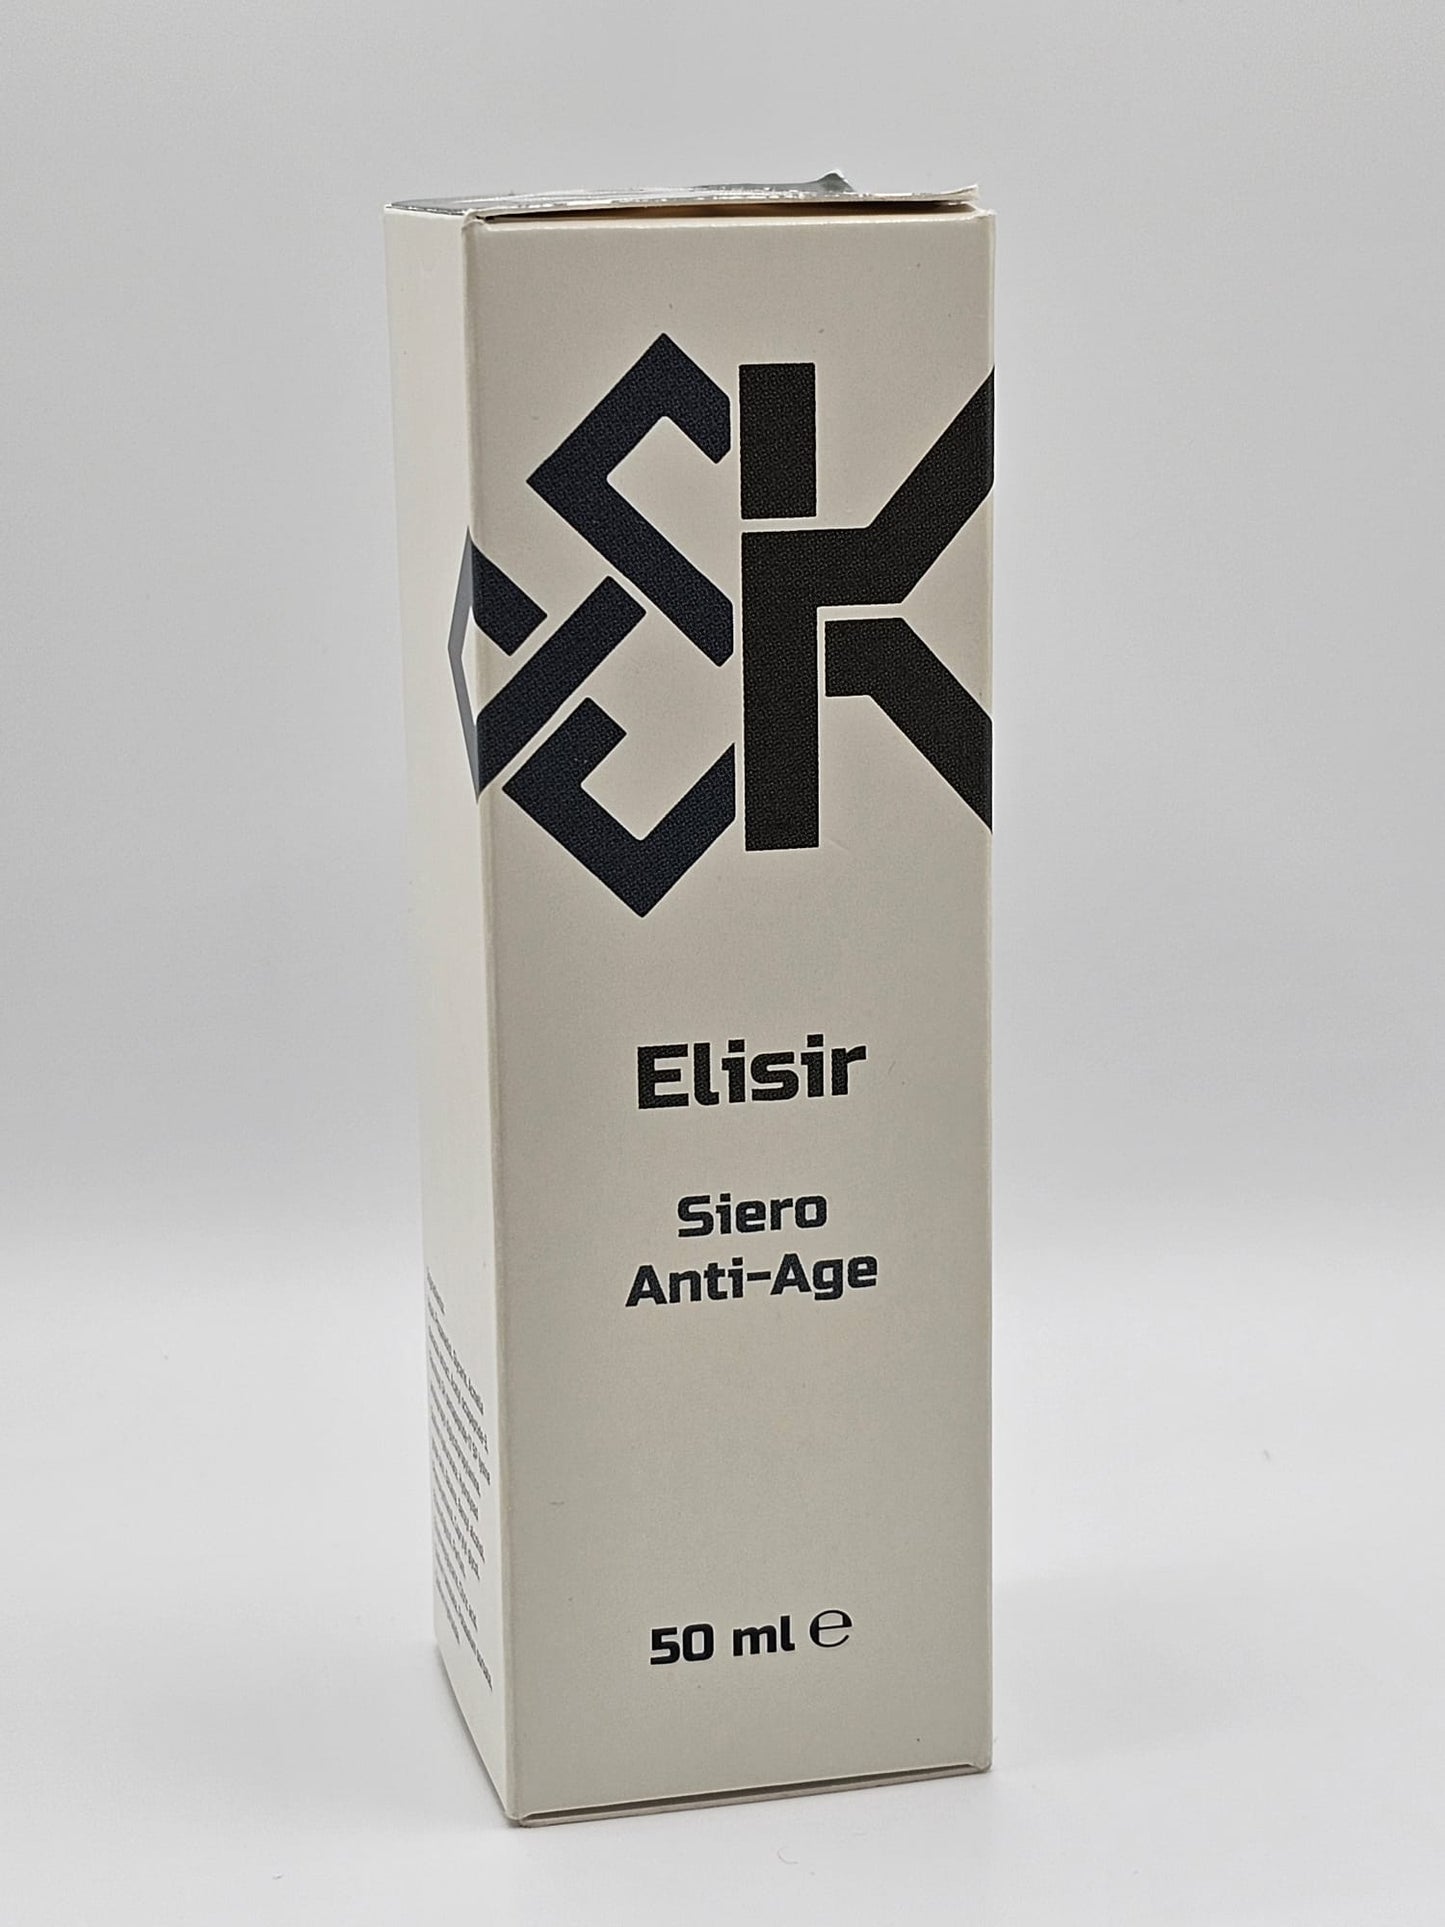 ELISIR Siero Anti-Age 50ml